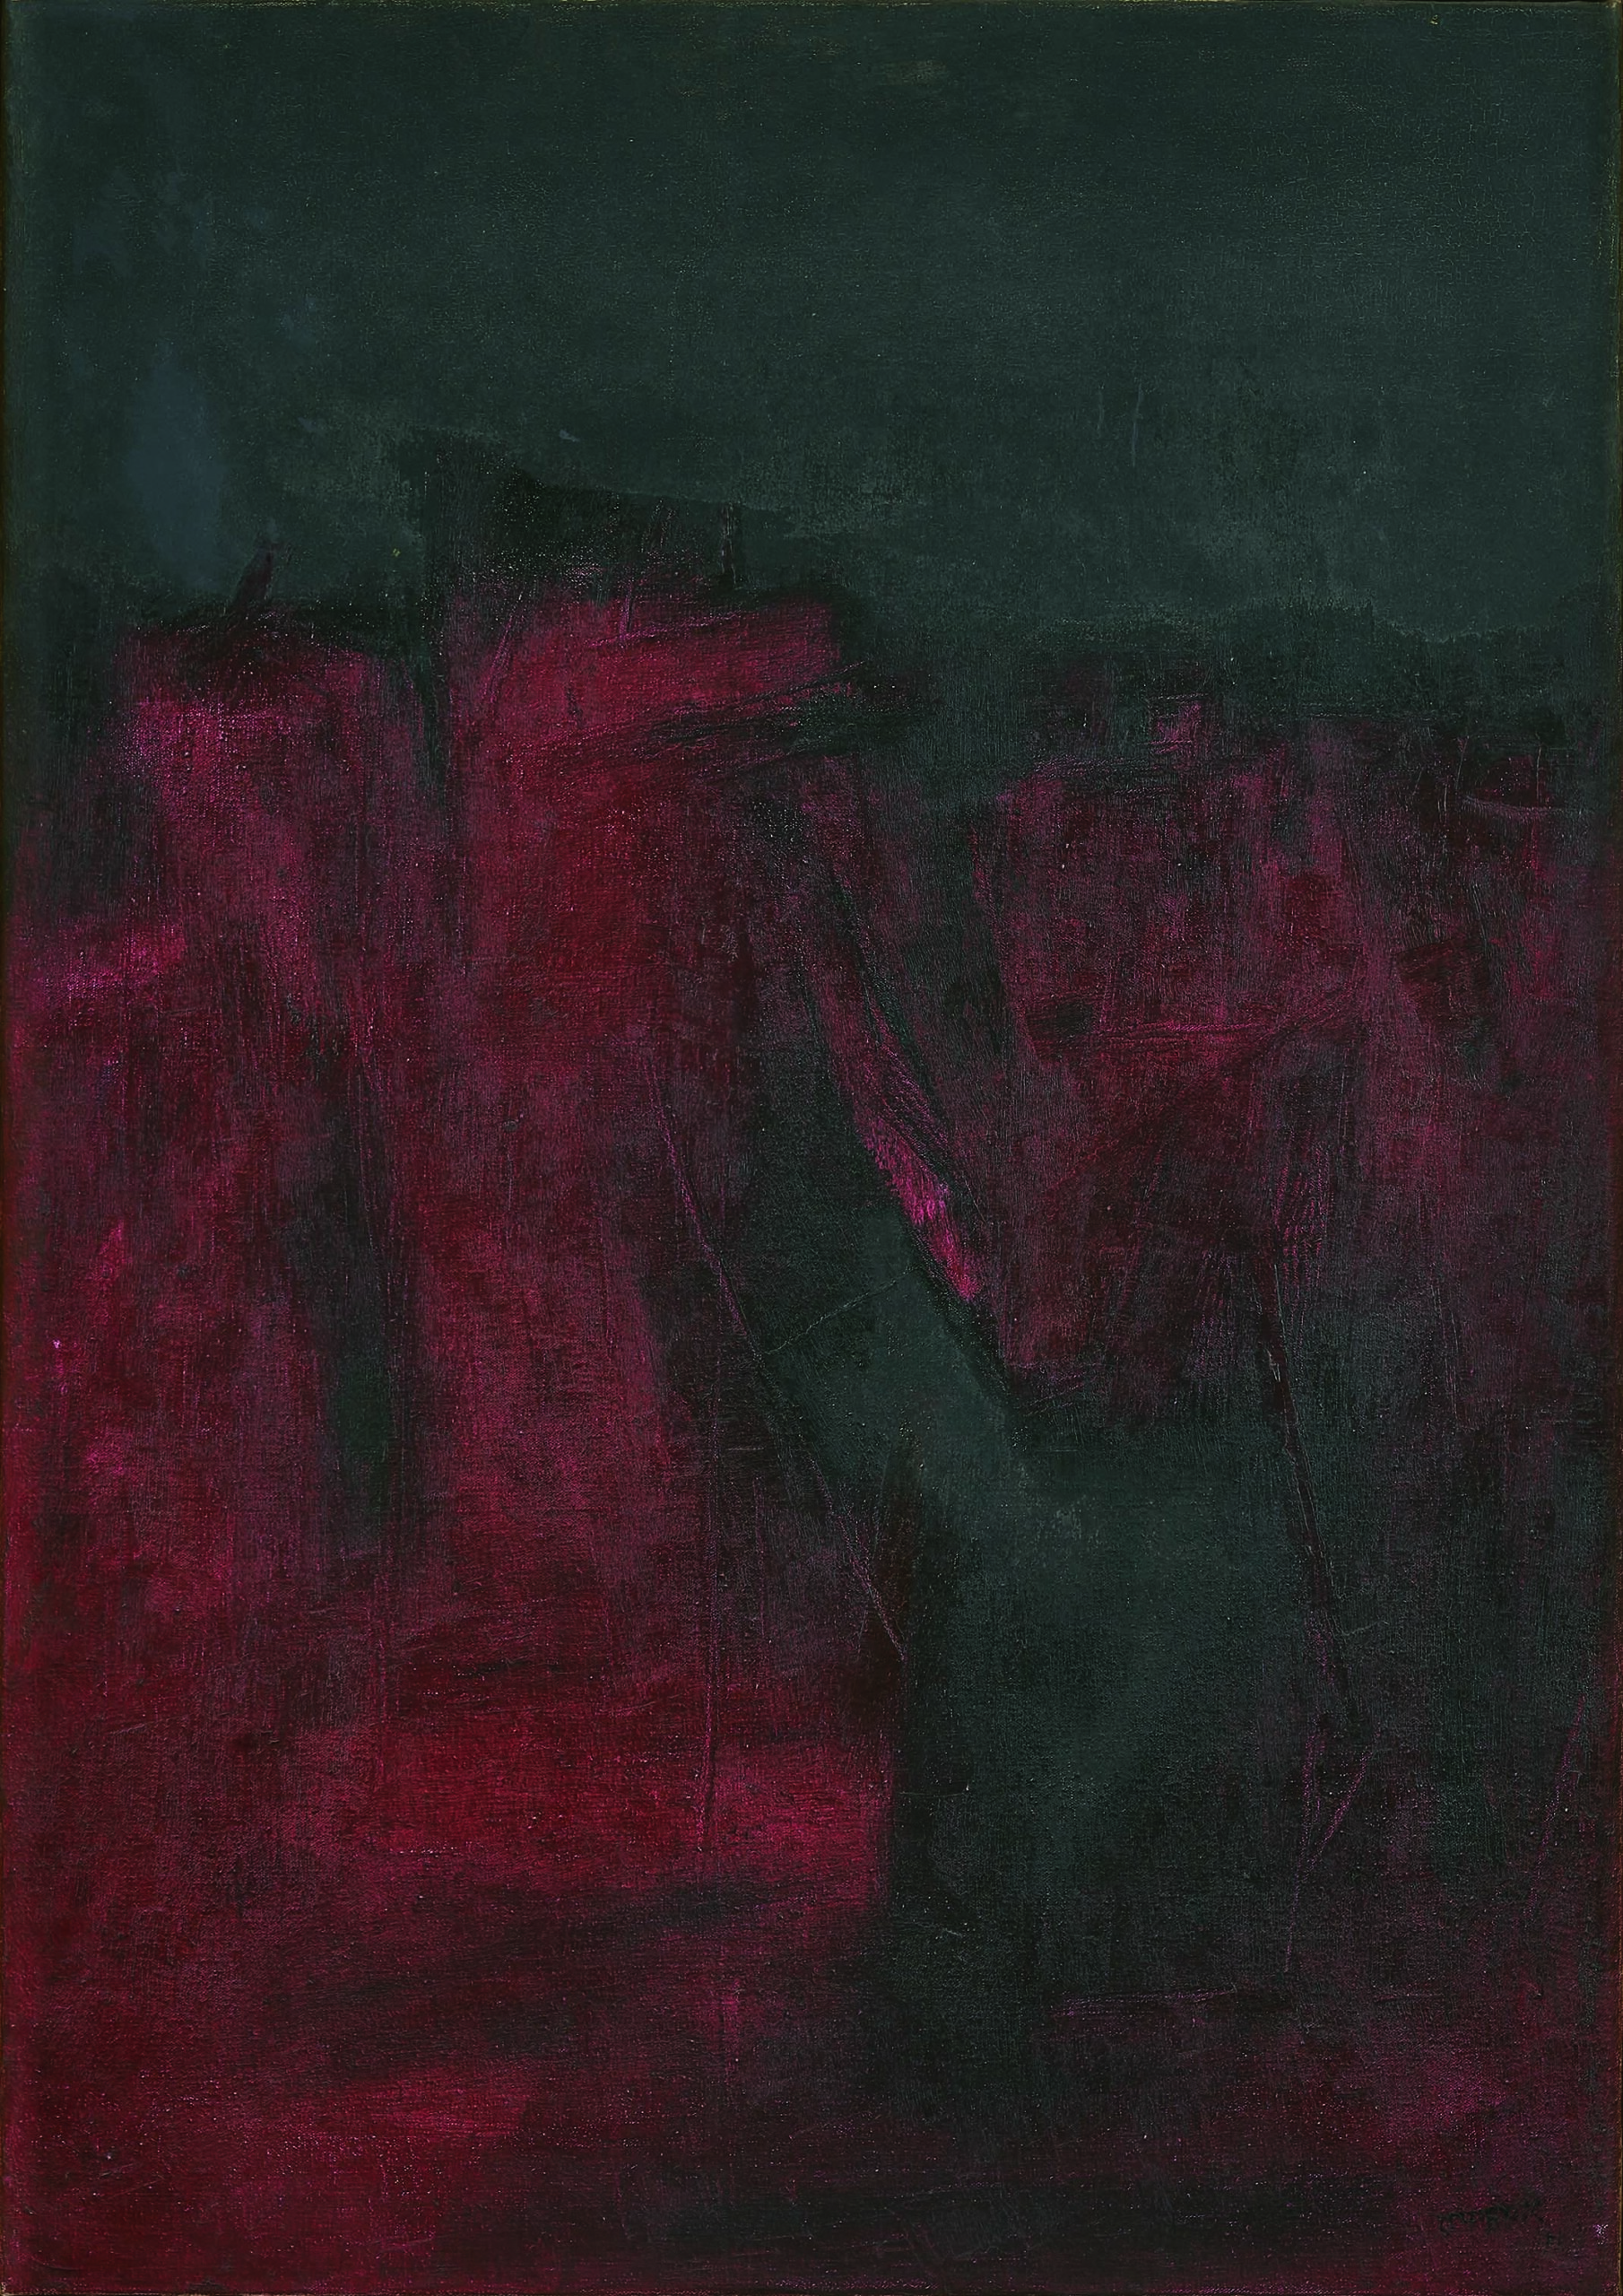 RAM KUMAR, Untitled, Oil on canvas, 1971, 34 x 24 in.